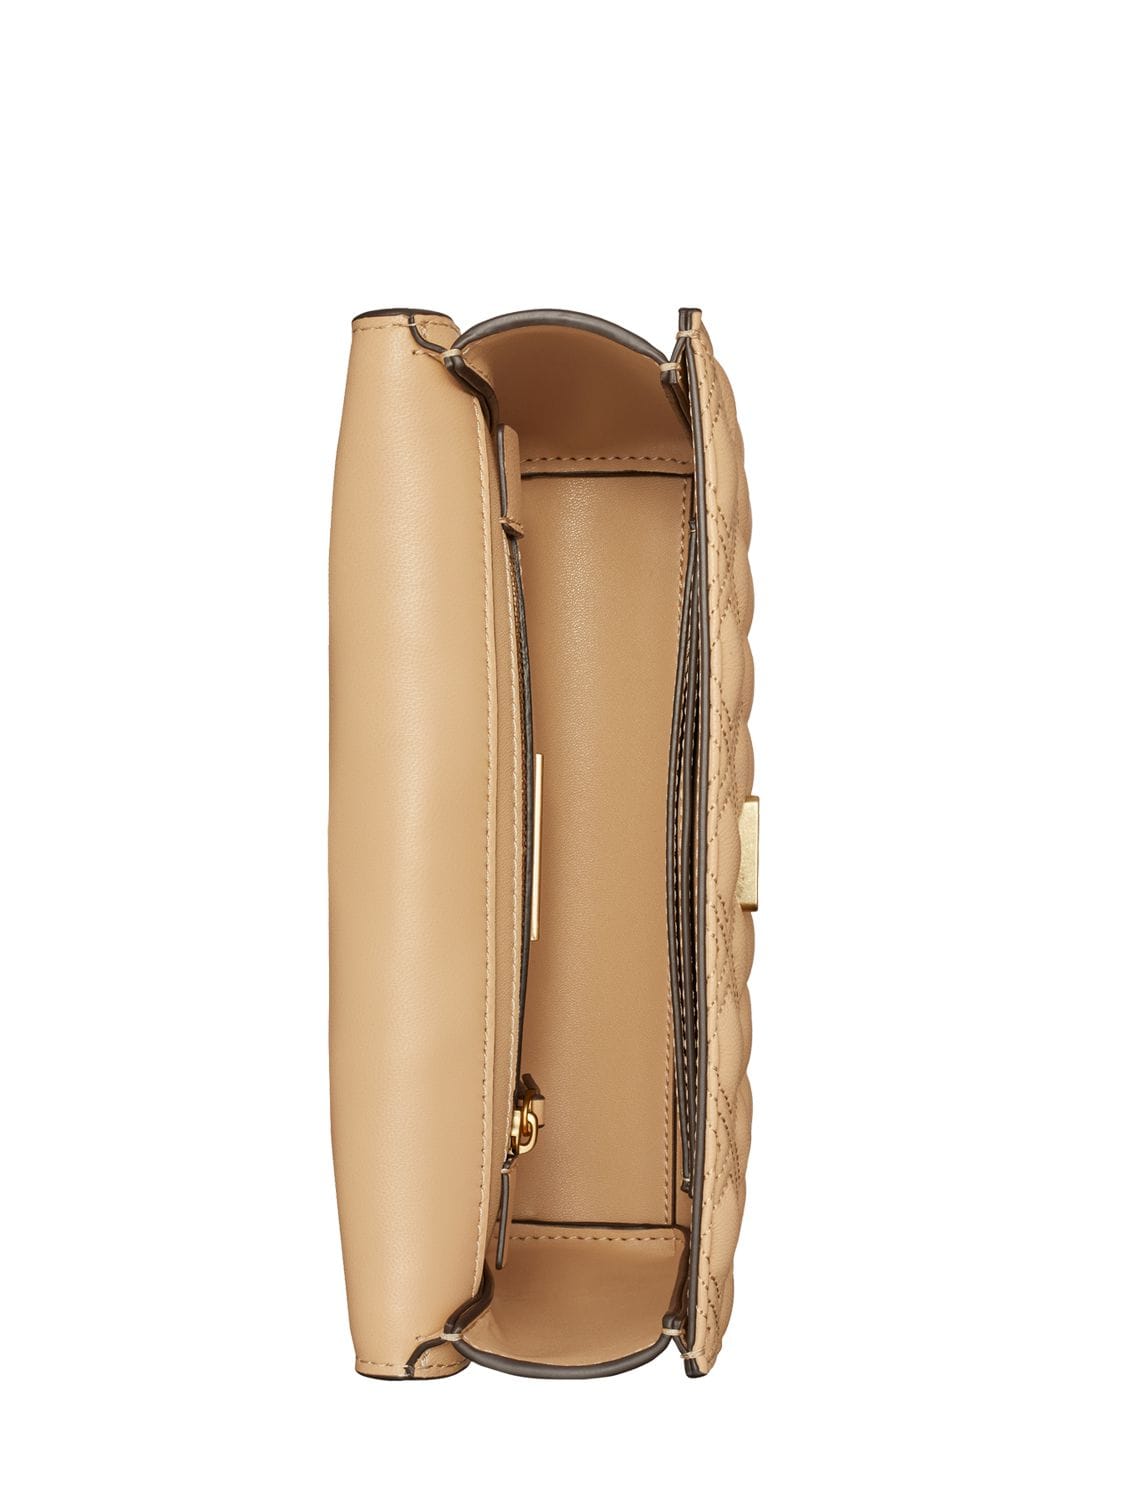 BRAND NEW LARGE Tory Burch Fleming Soft Convertible Shoulder Bag Black -  $698 $450.00 - PicClick